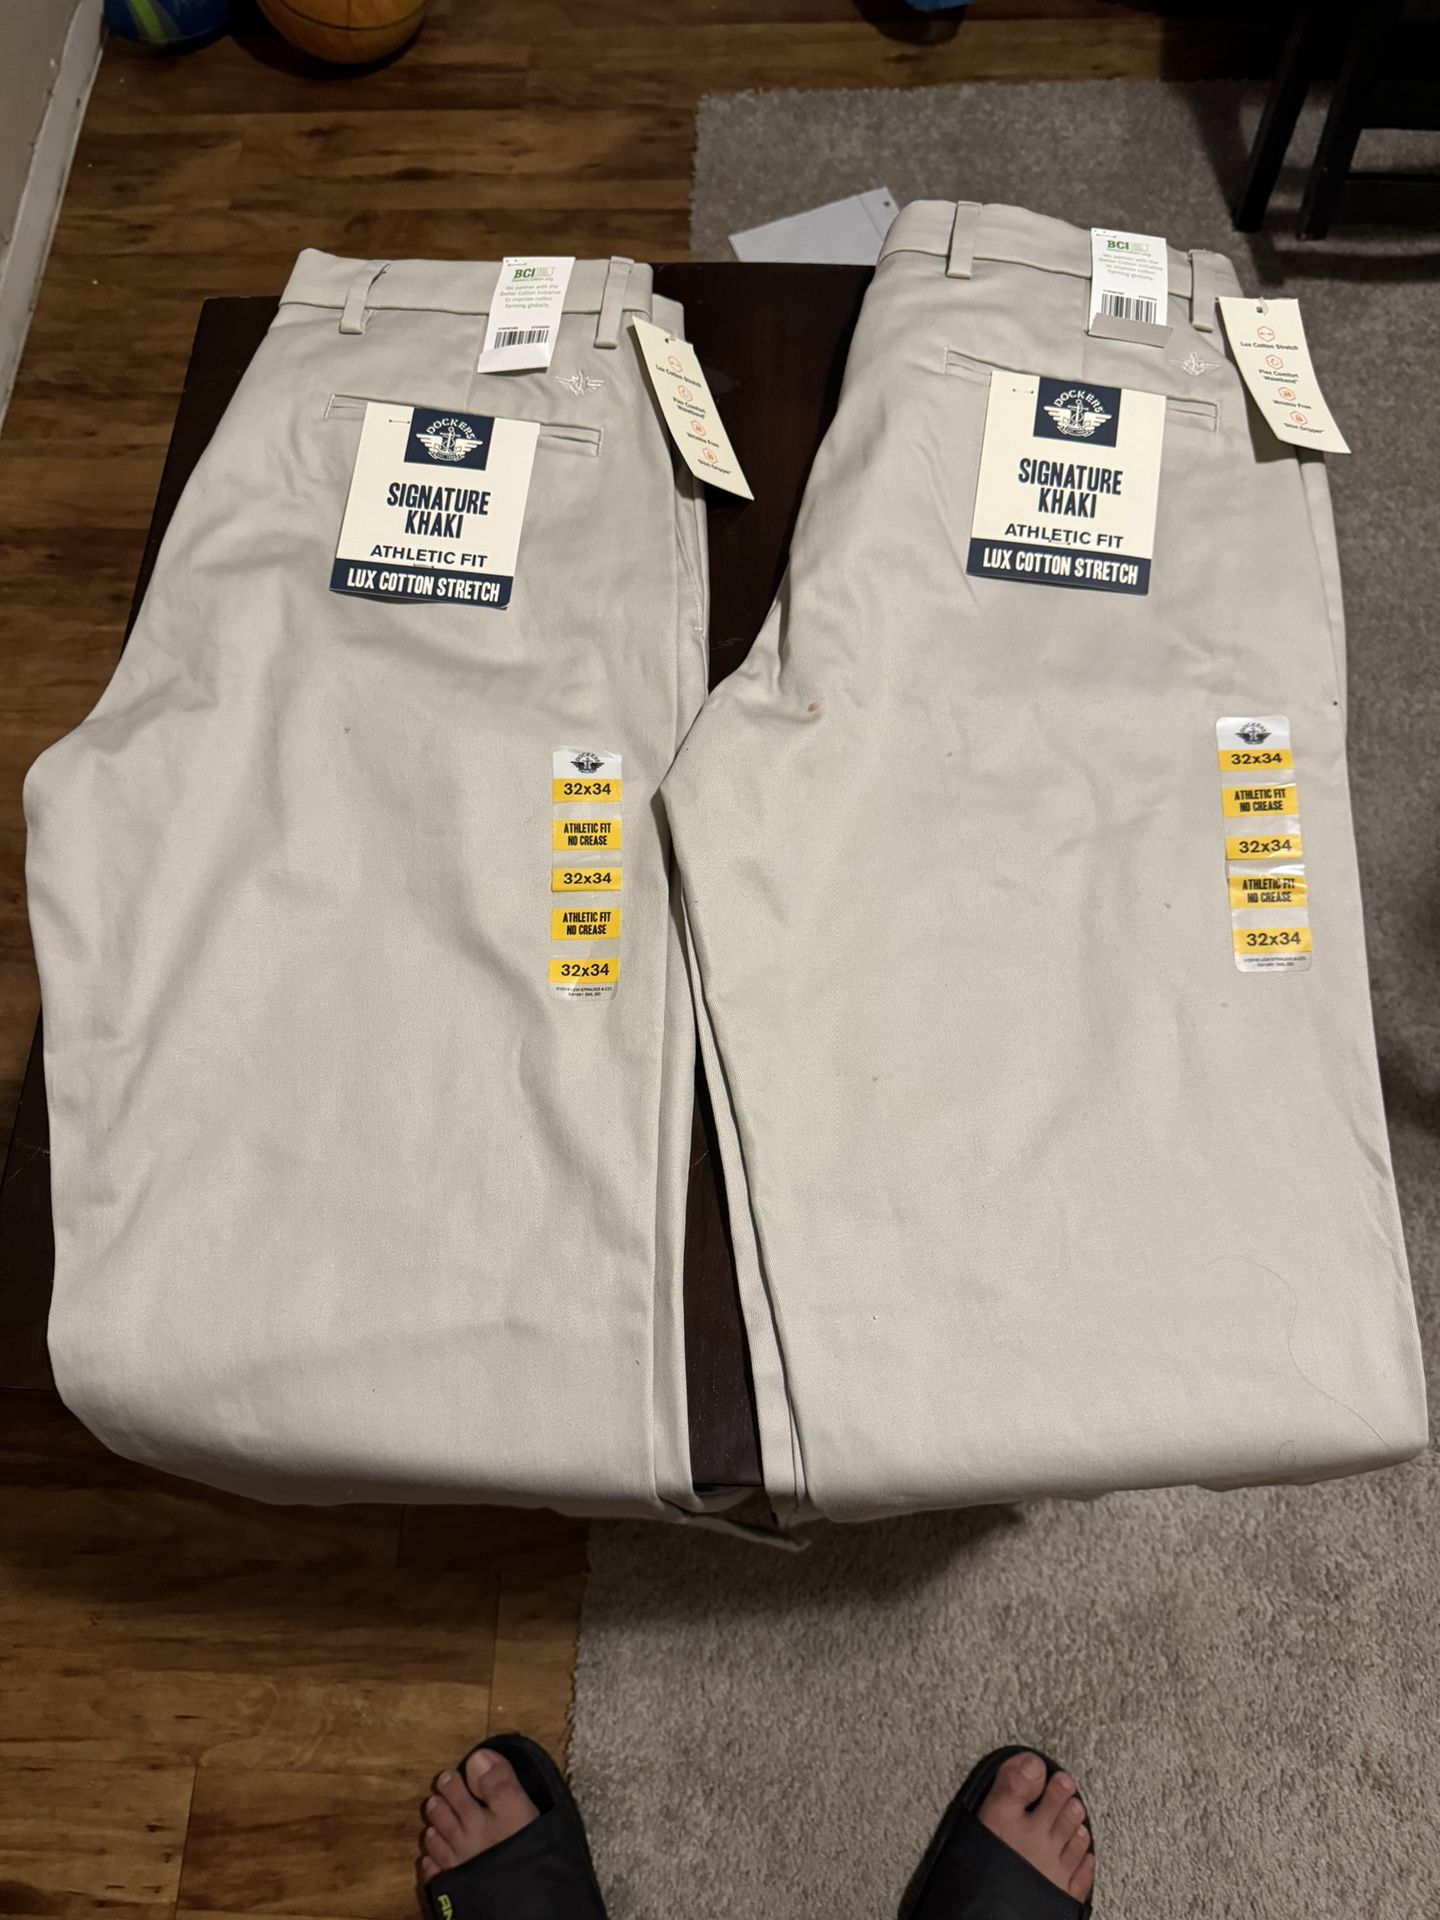 Two Men’s Dockers 32x34 Pants 